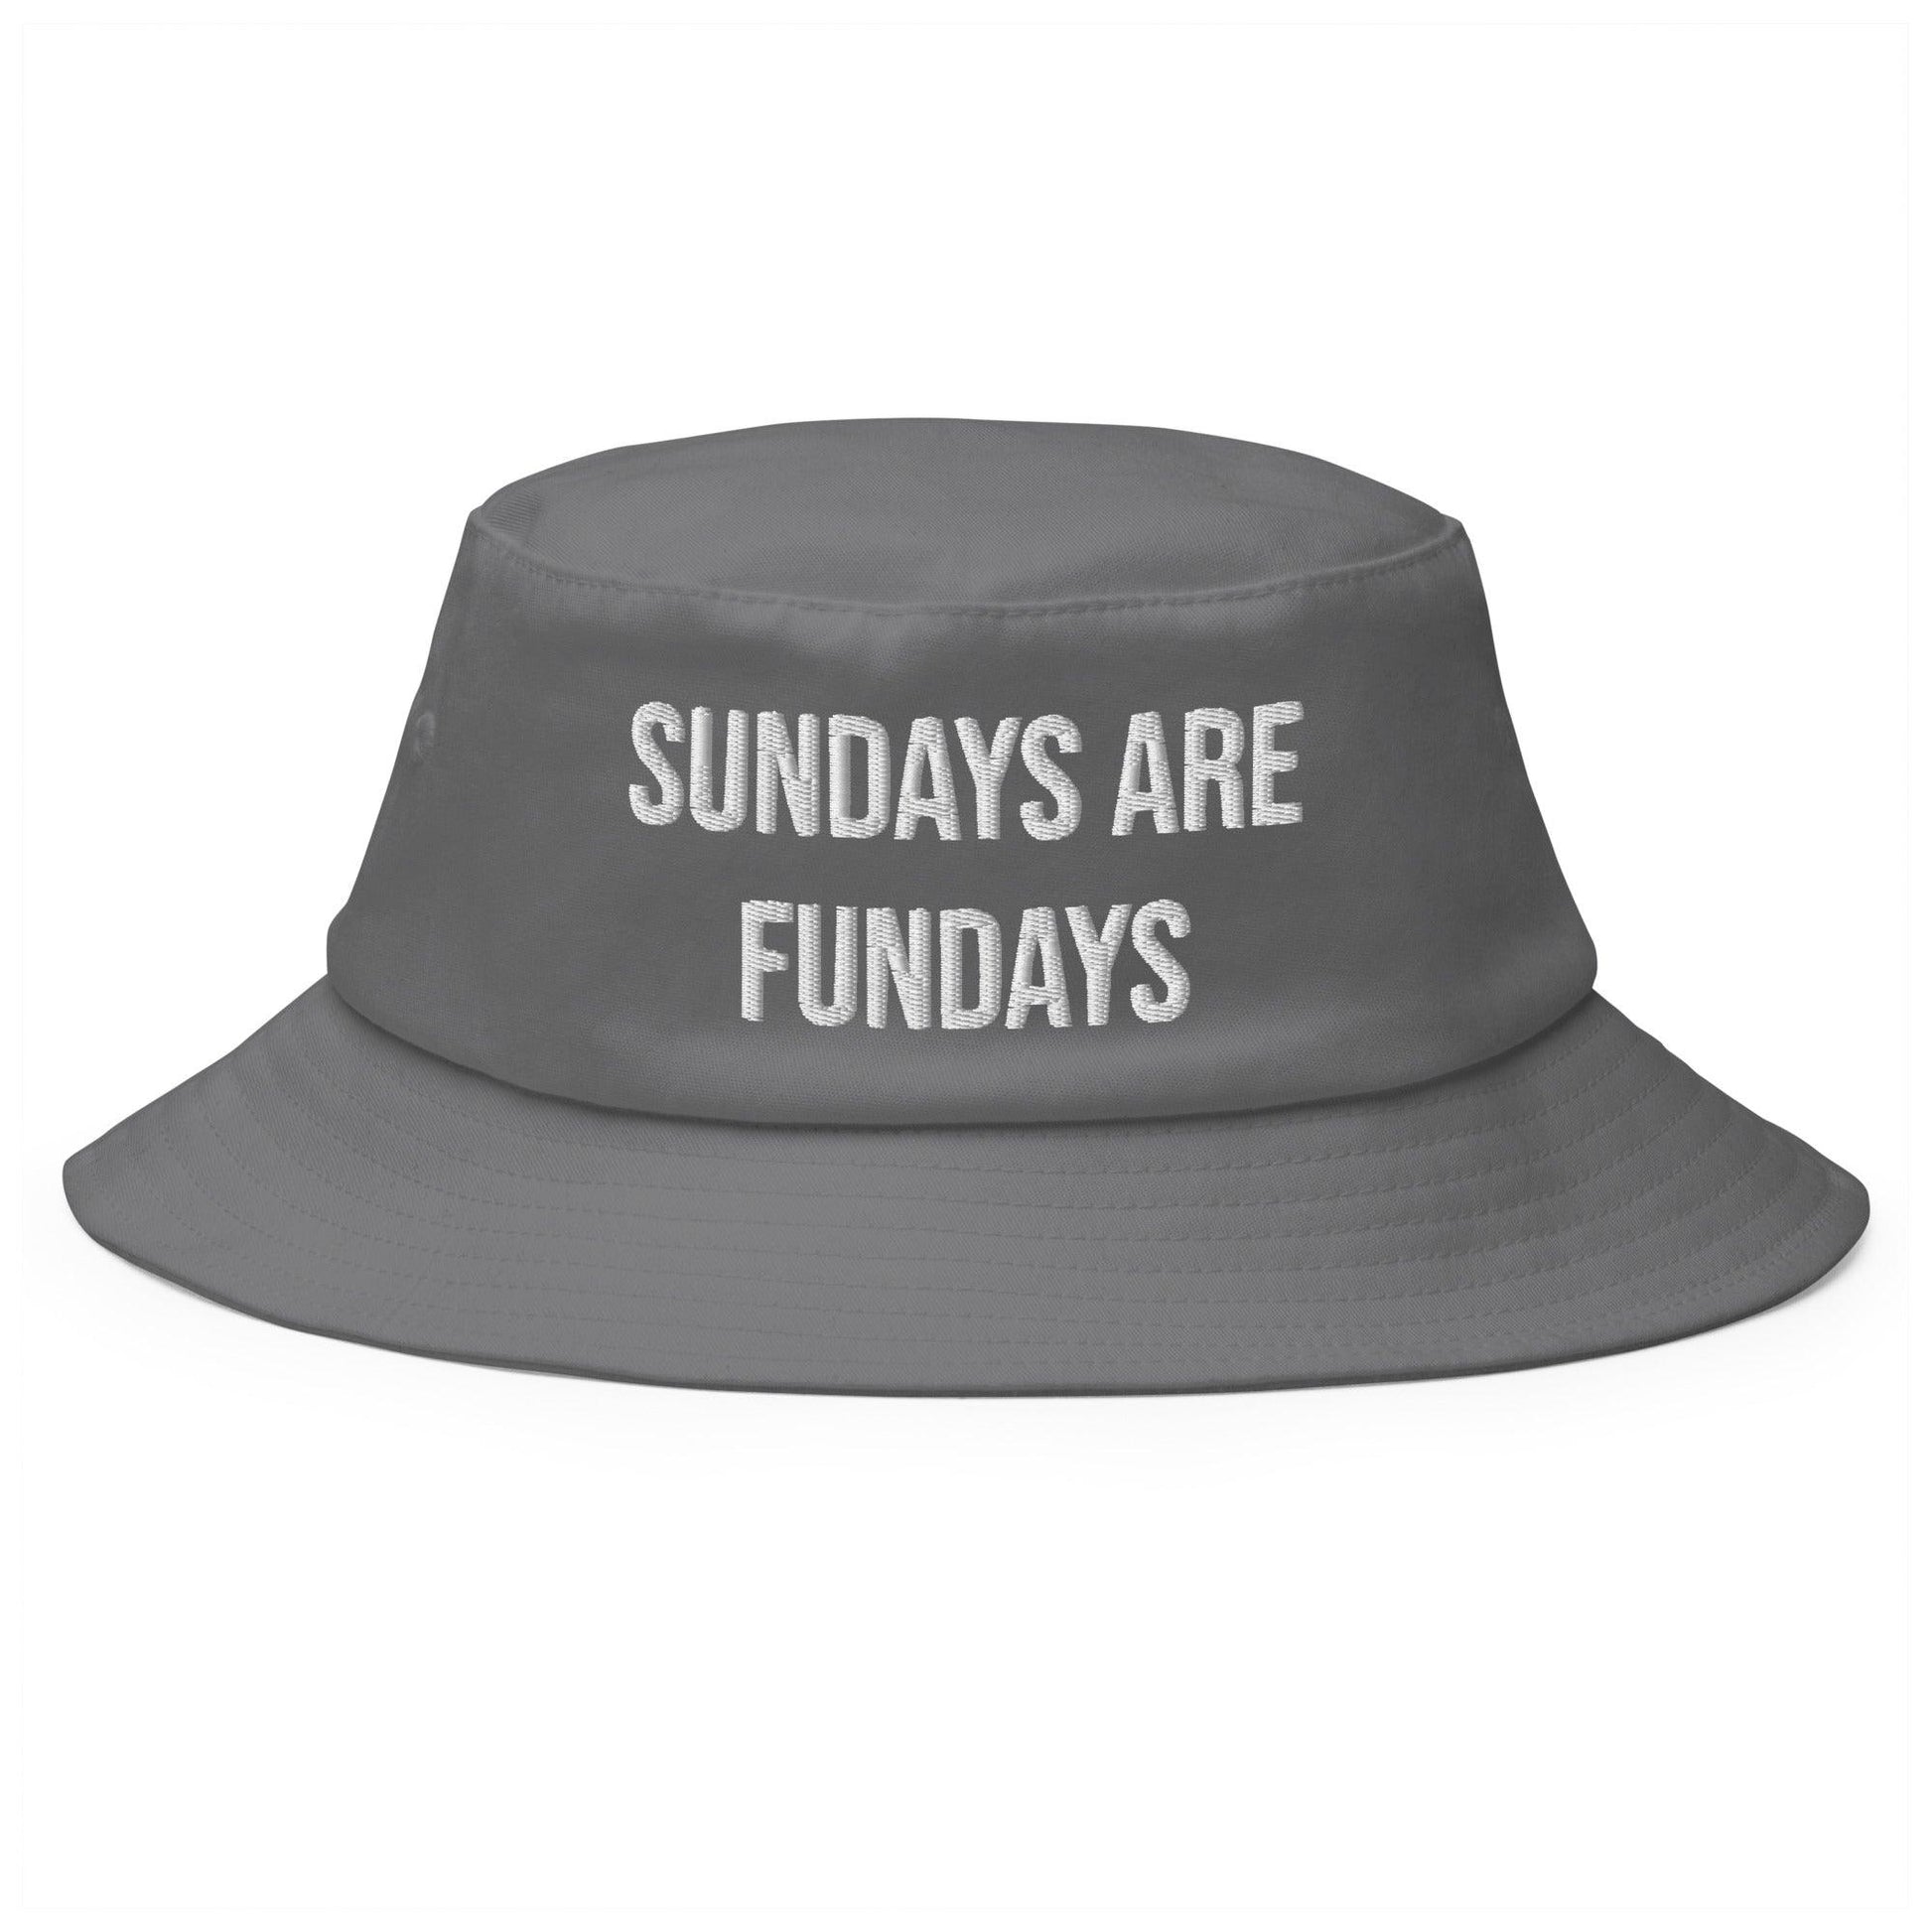 Sundays are Fundays - Old School Bucket Hat - CatsOnDrugs